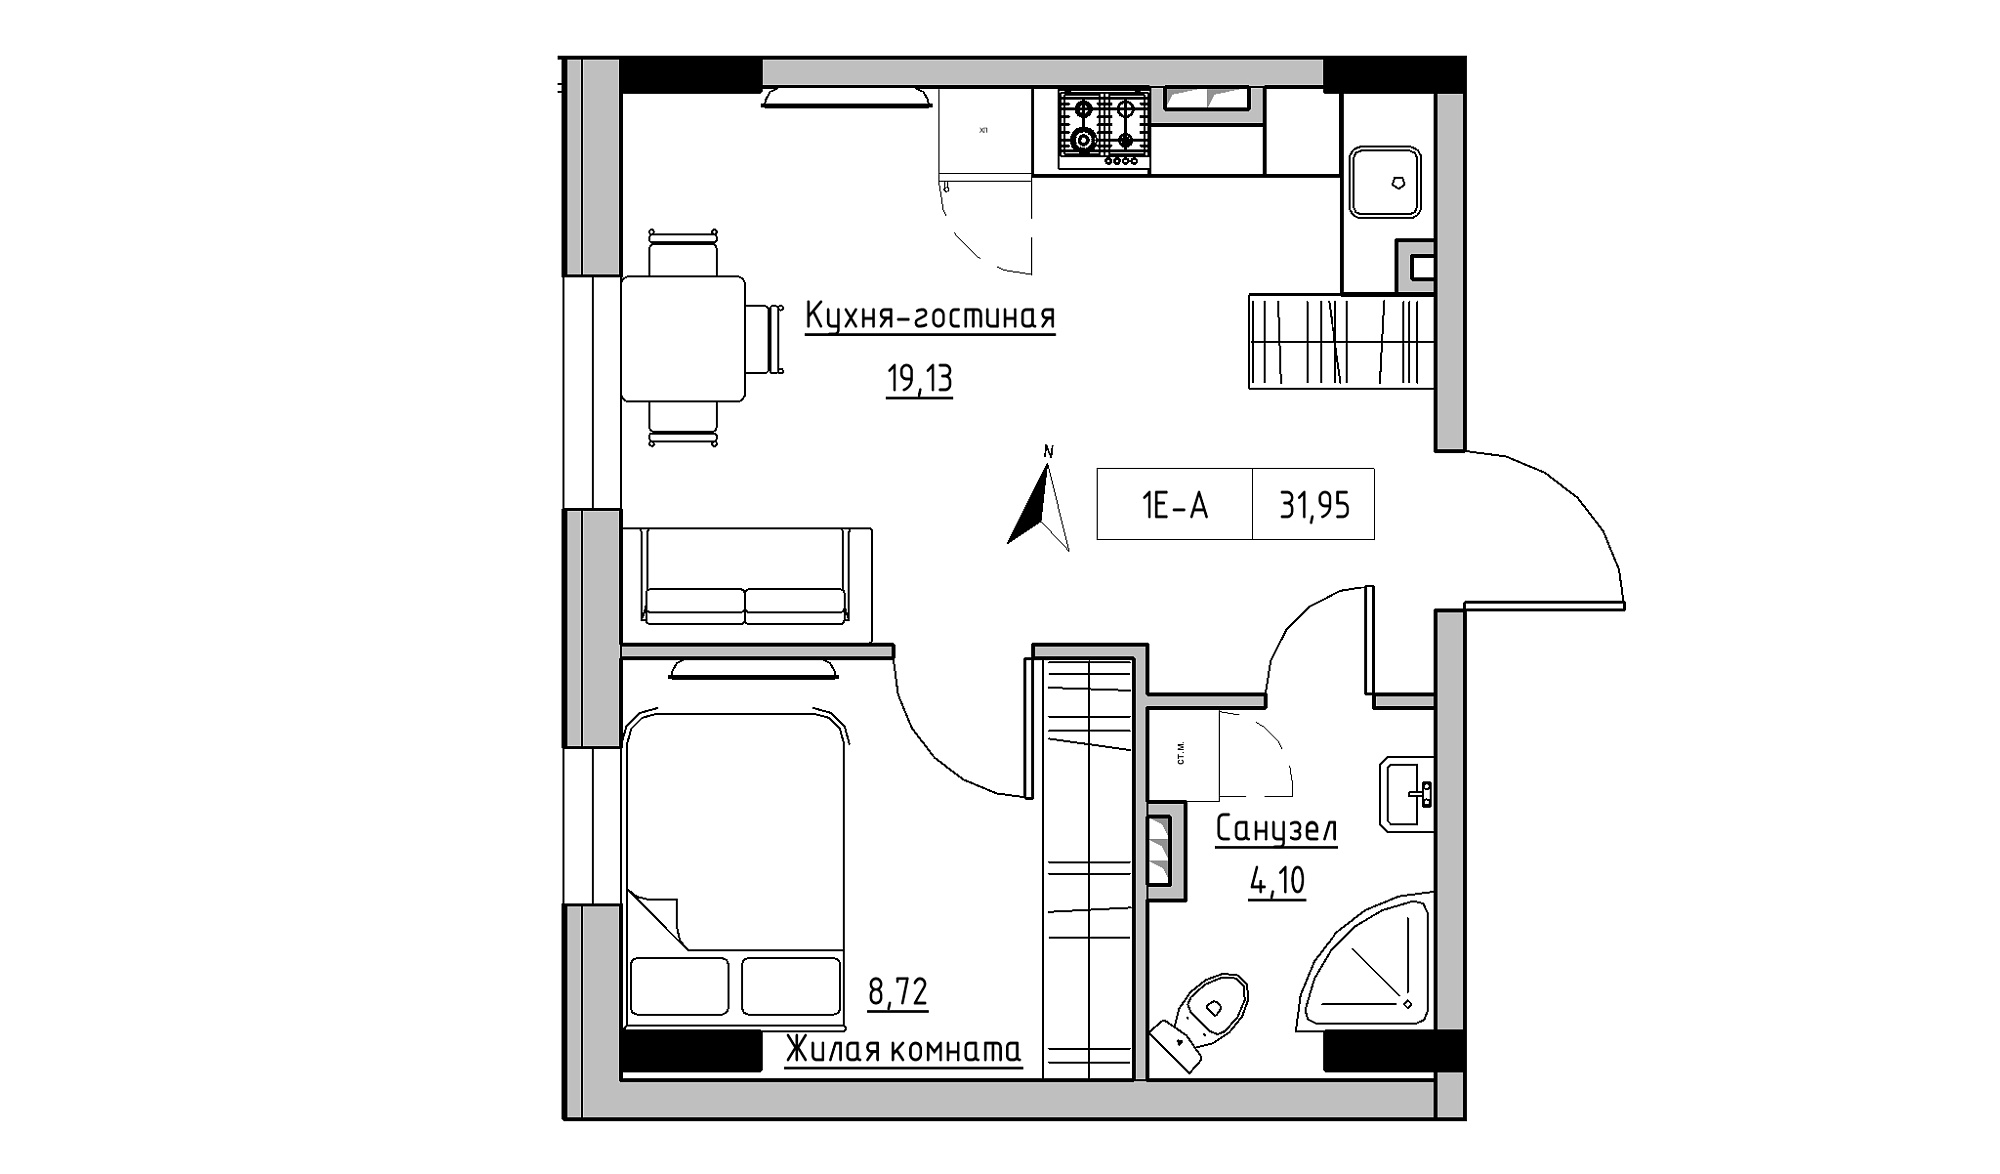 Planning 1-rm flats area 31.95m2, KS-025-02/0003.